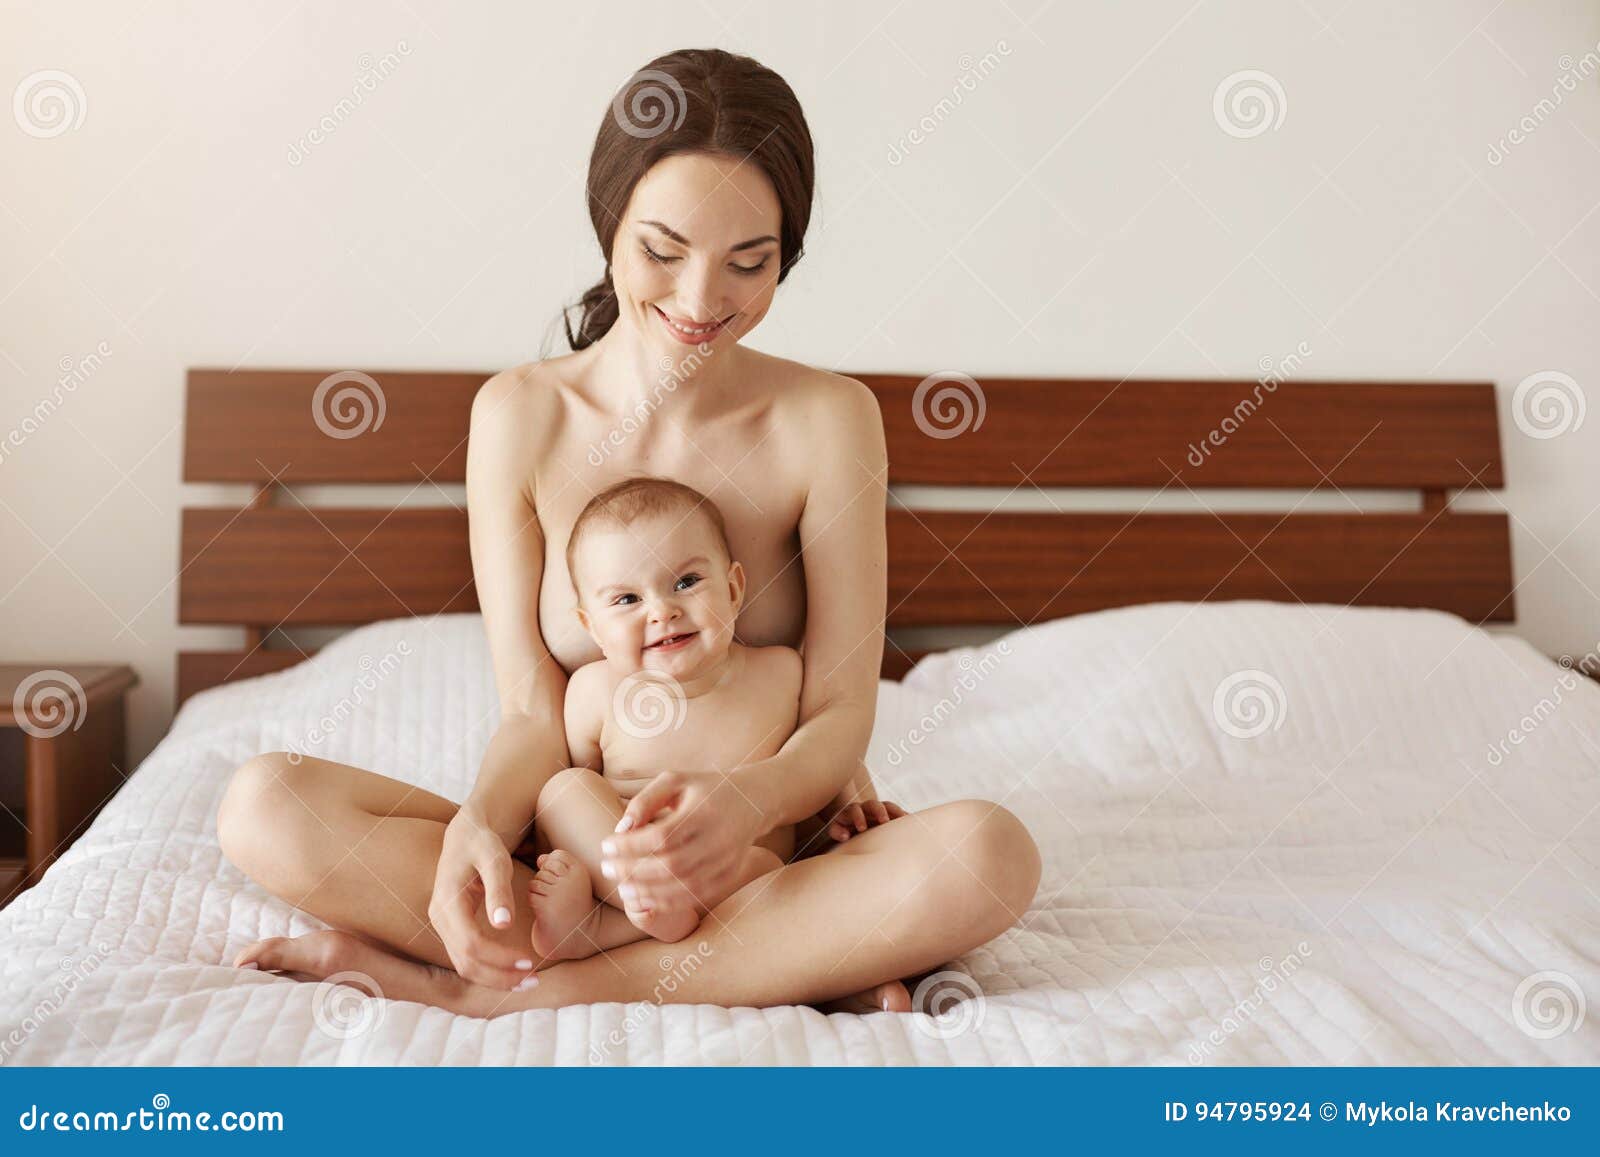 голые мамаши ребенок фото 10